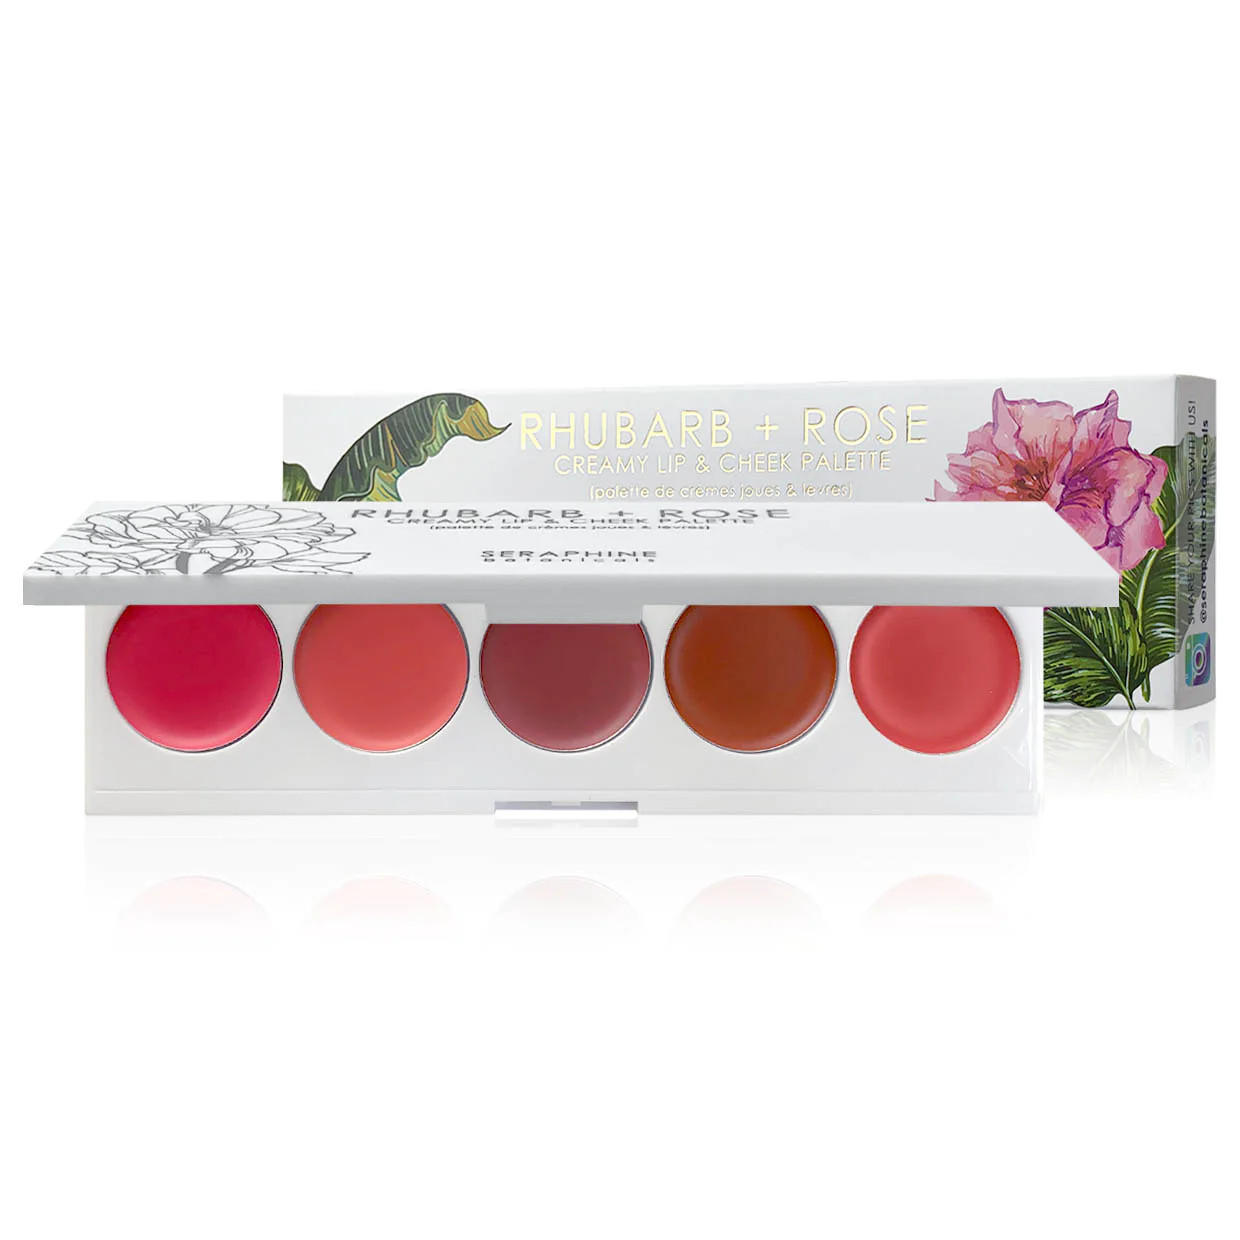 Seraphine Botanicals Rhubarb + Rose Creamy Lip & Cheek Palette